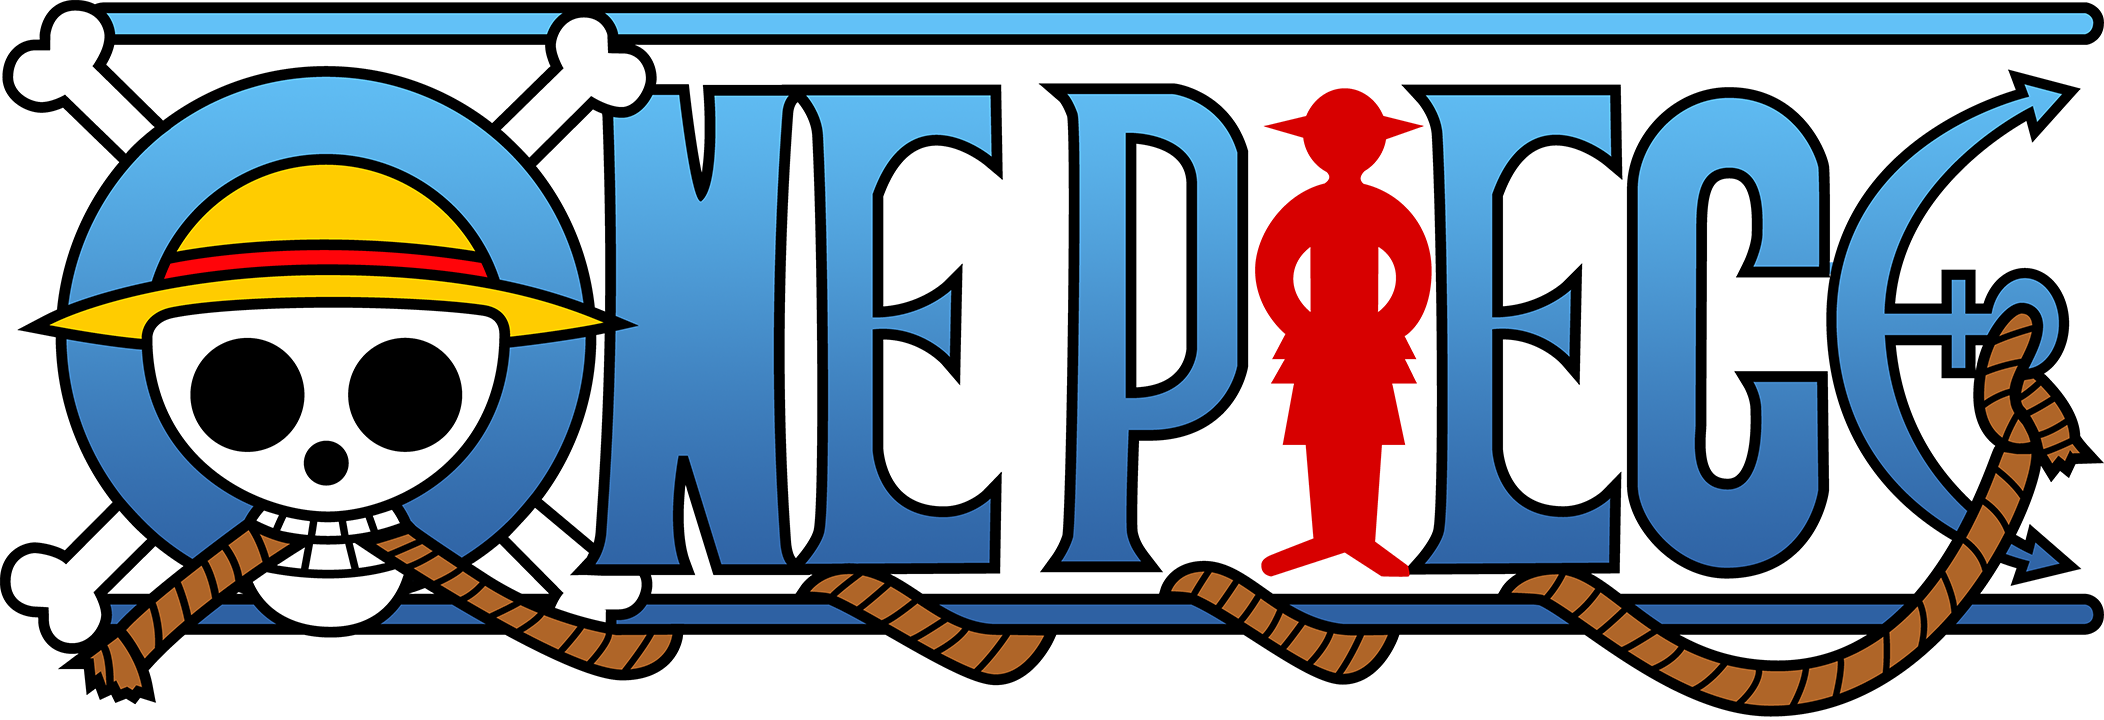 Image - One Piece Anime Logo.png | Logopedia | Fandom powered by Wikia